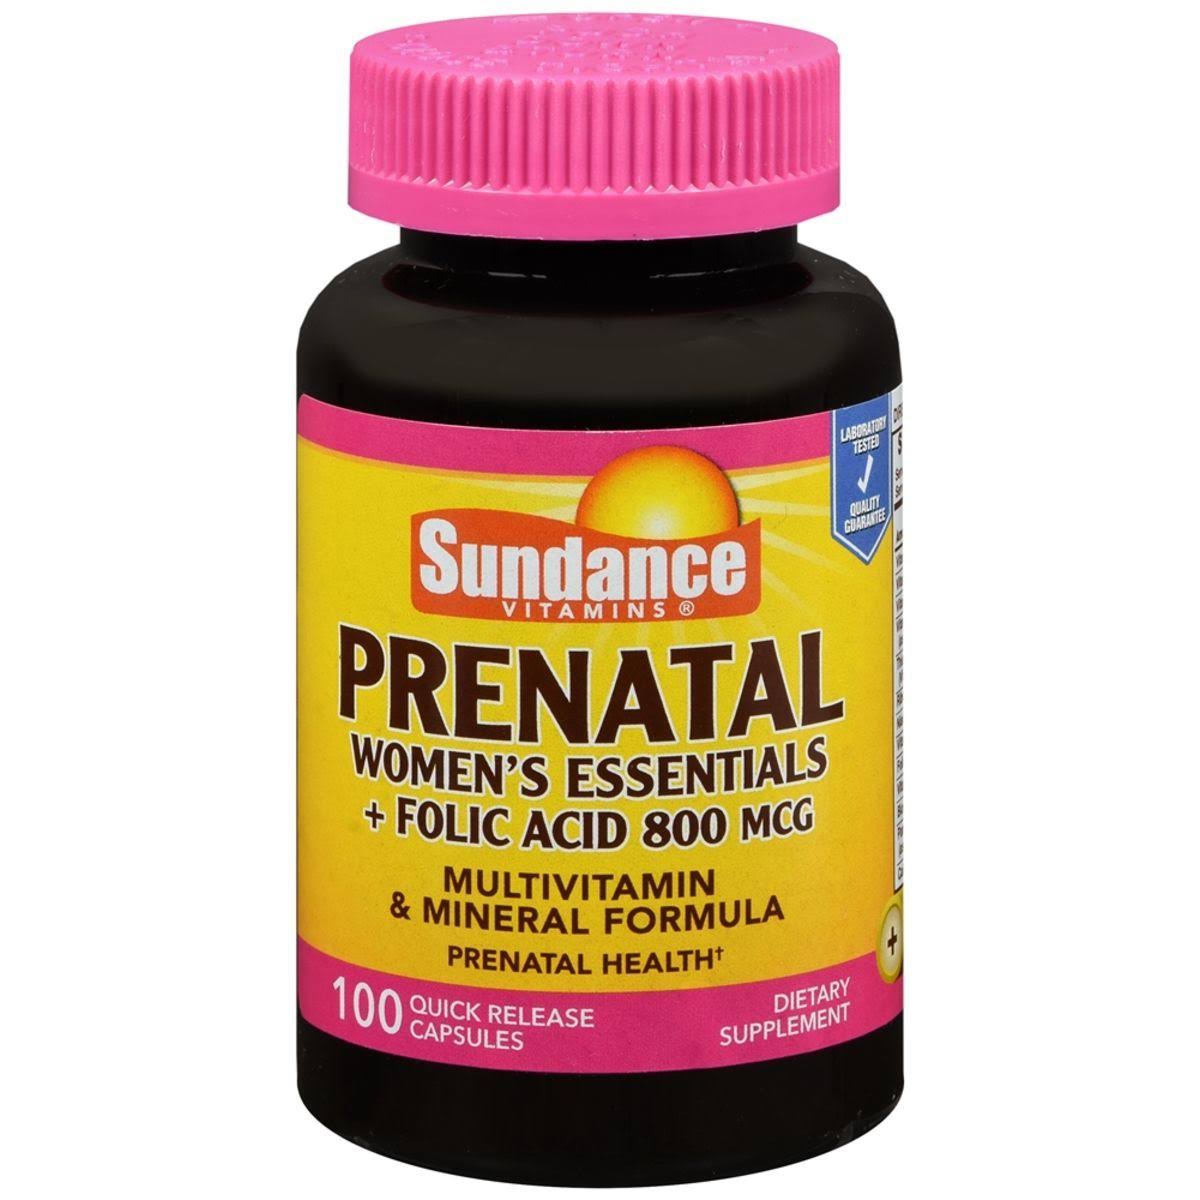 Sundance Women's Prenatal Essentials & Folic Acid Multivitamin & Mineral Formula - 100 Quick Release Capsules